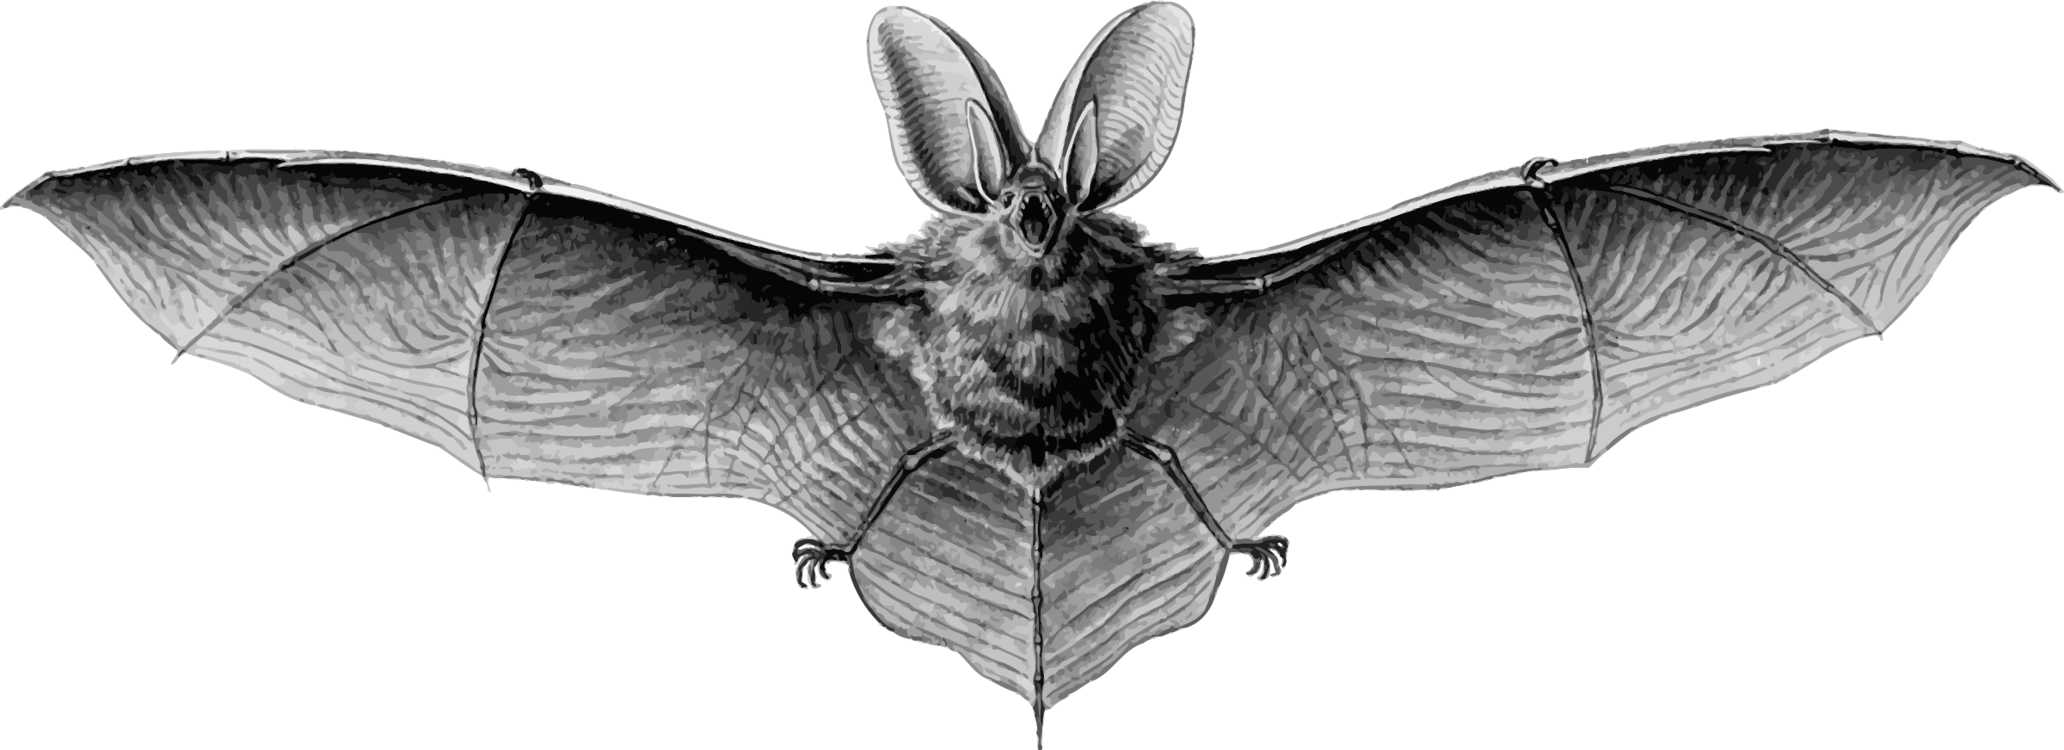 Bat,Bombycidae,Monochrome Photography